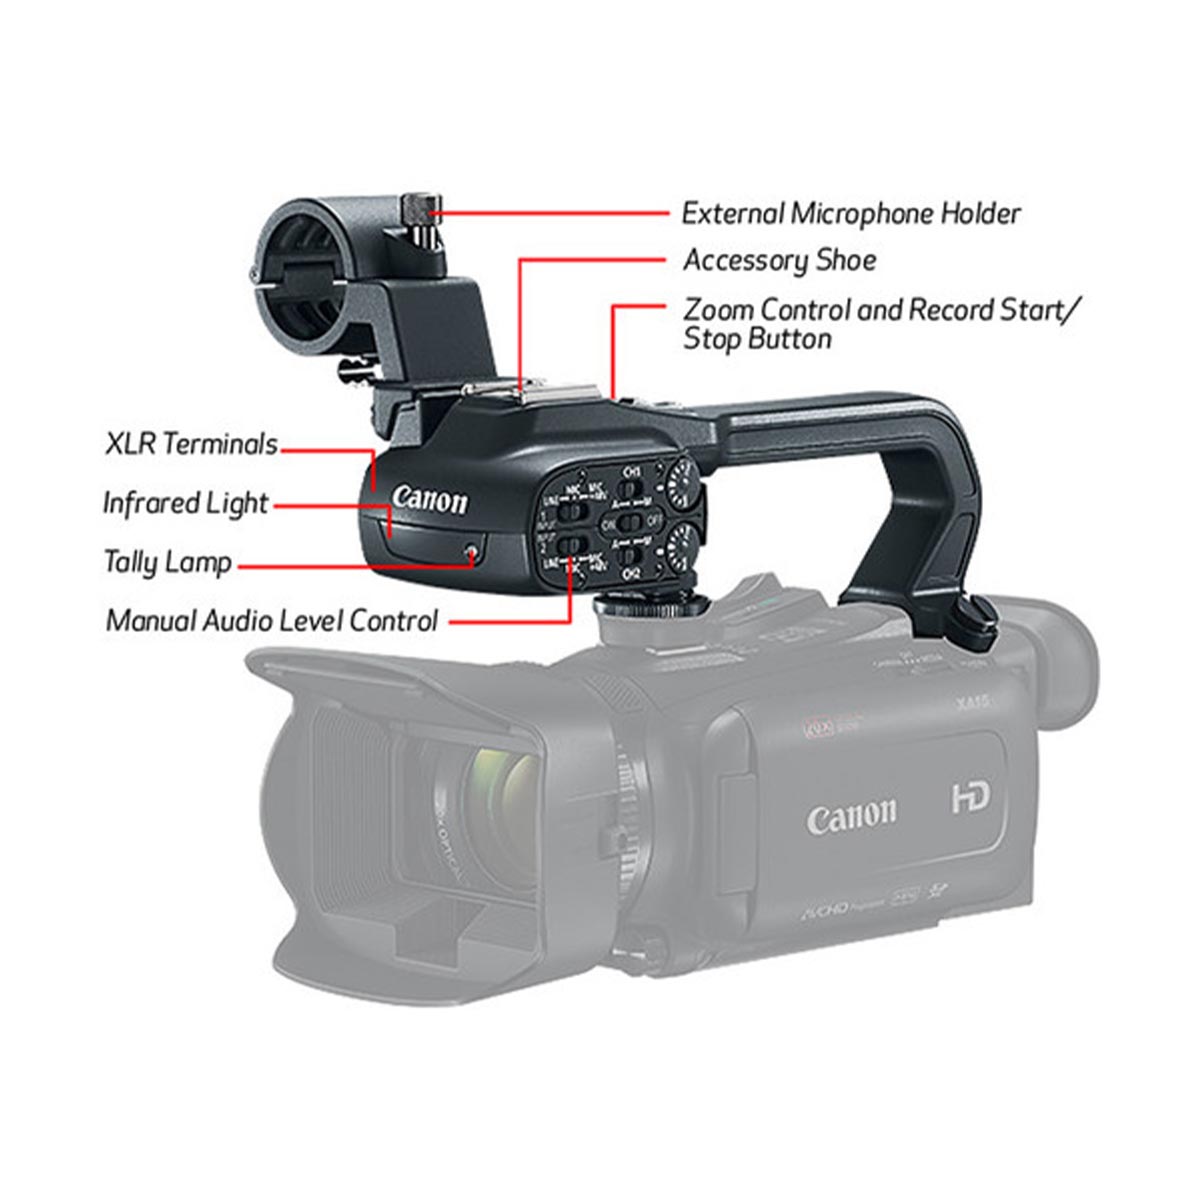 Canon XA15 Professional HD Camcorder